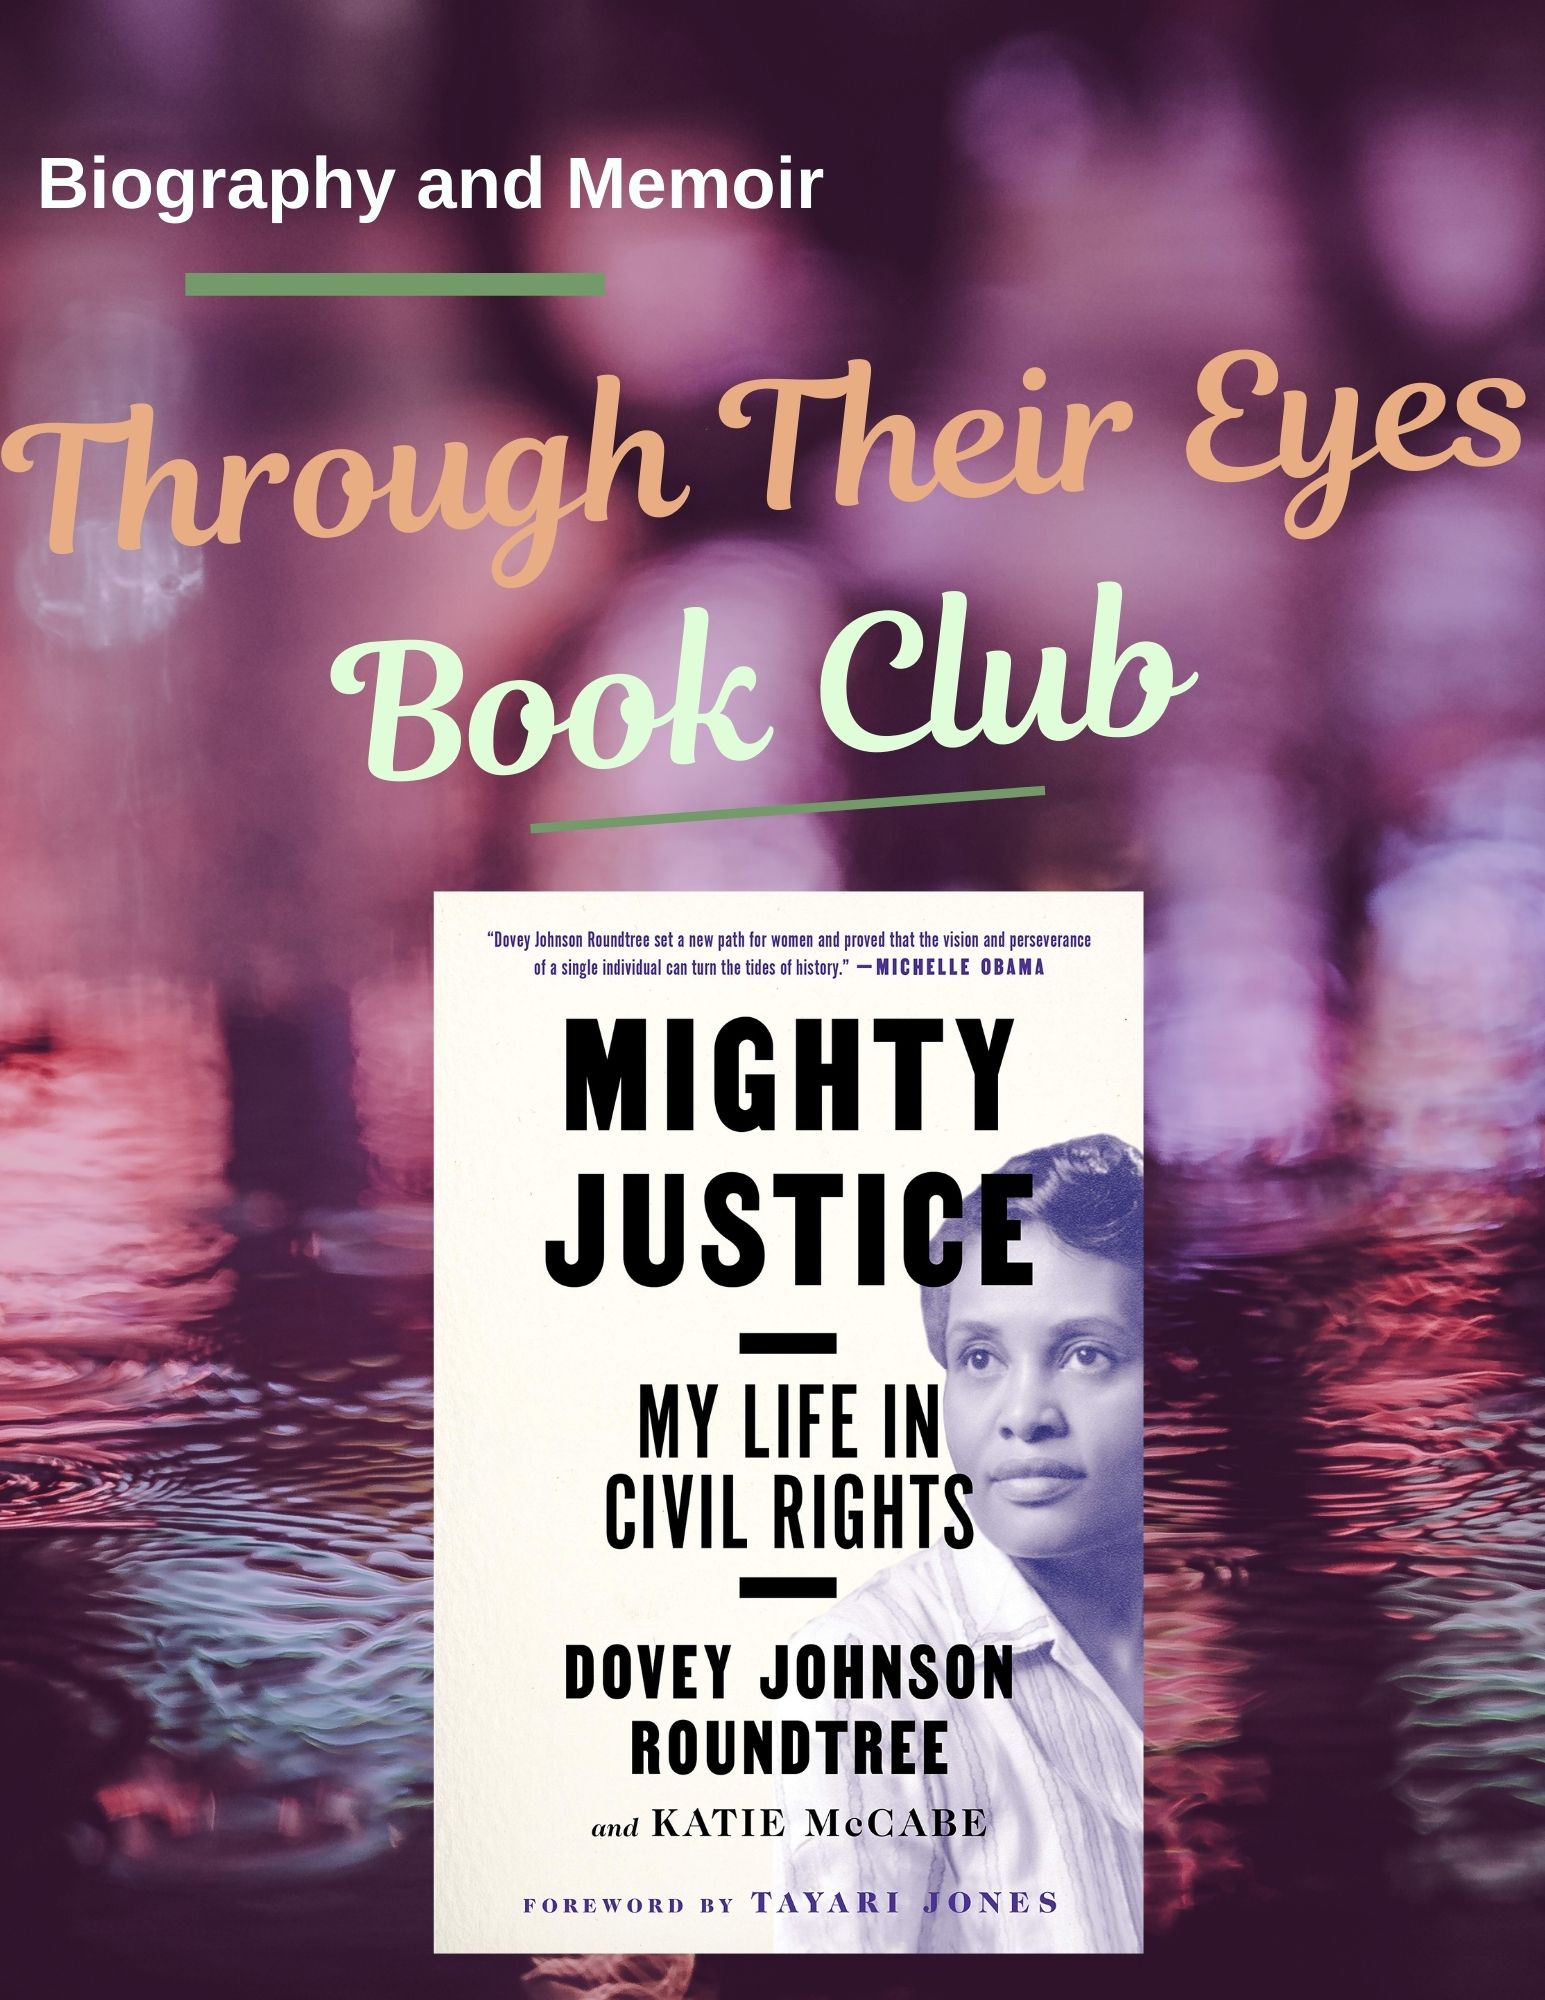 Through Their Eyes Book Club: Might Justice